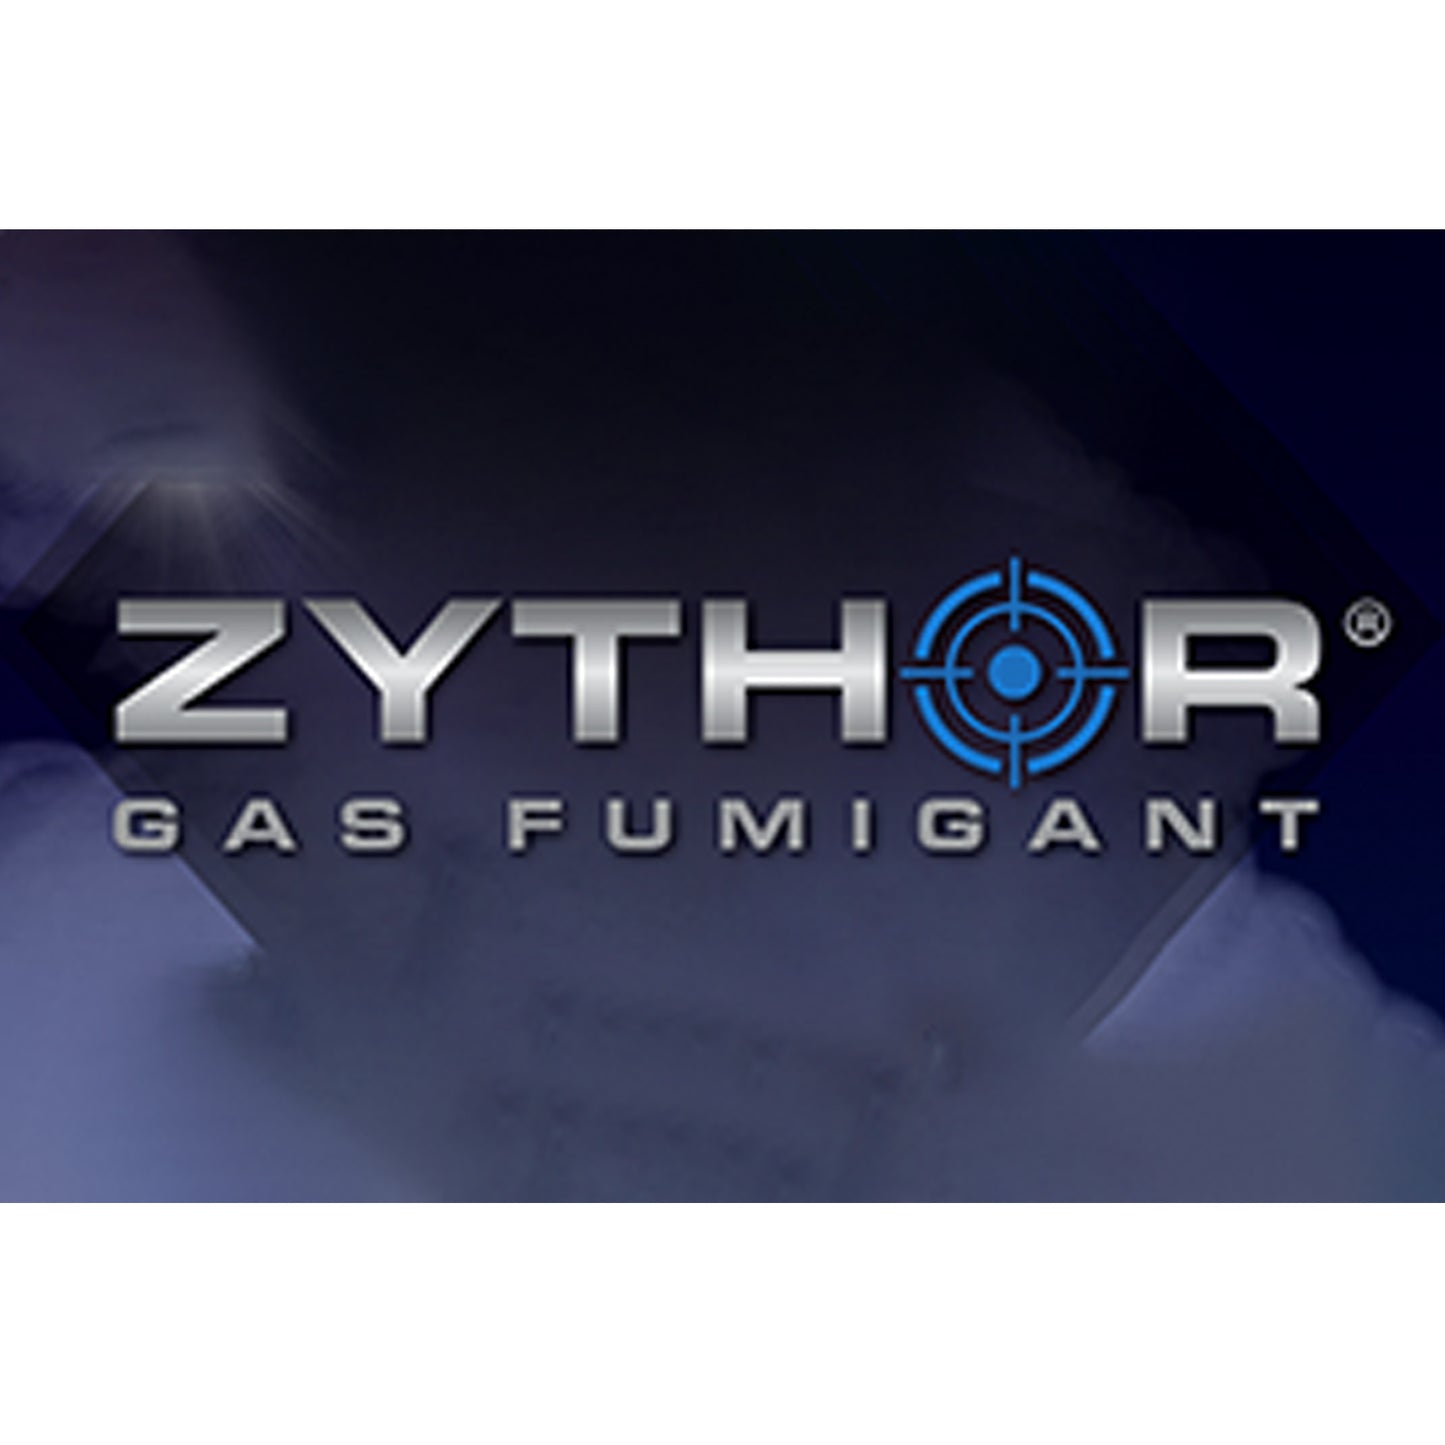 ZYTHOR® Gas Fumigant